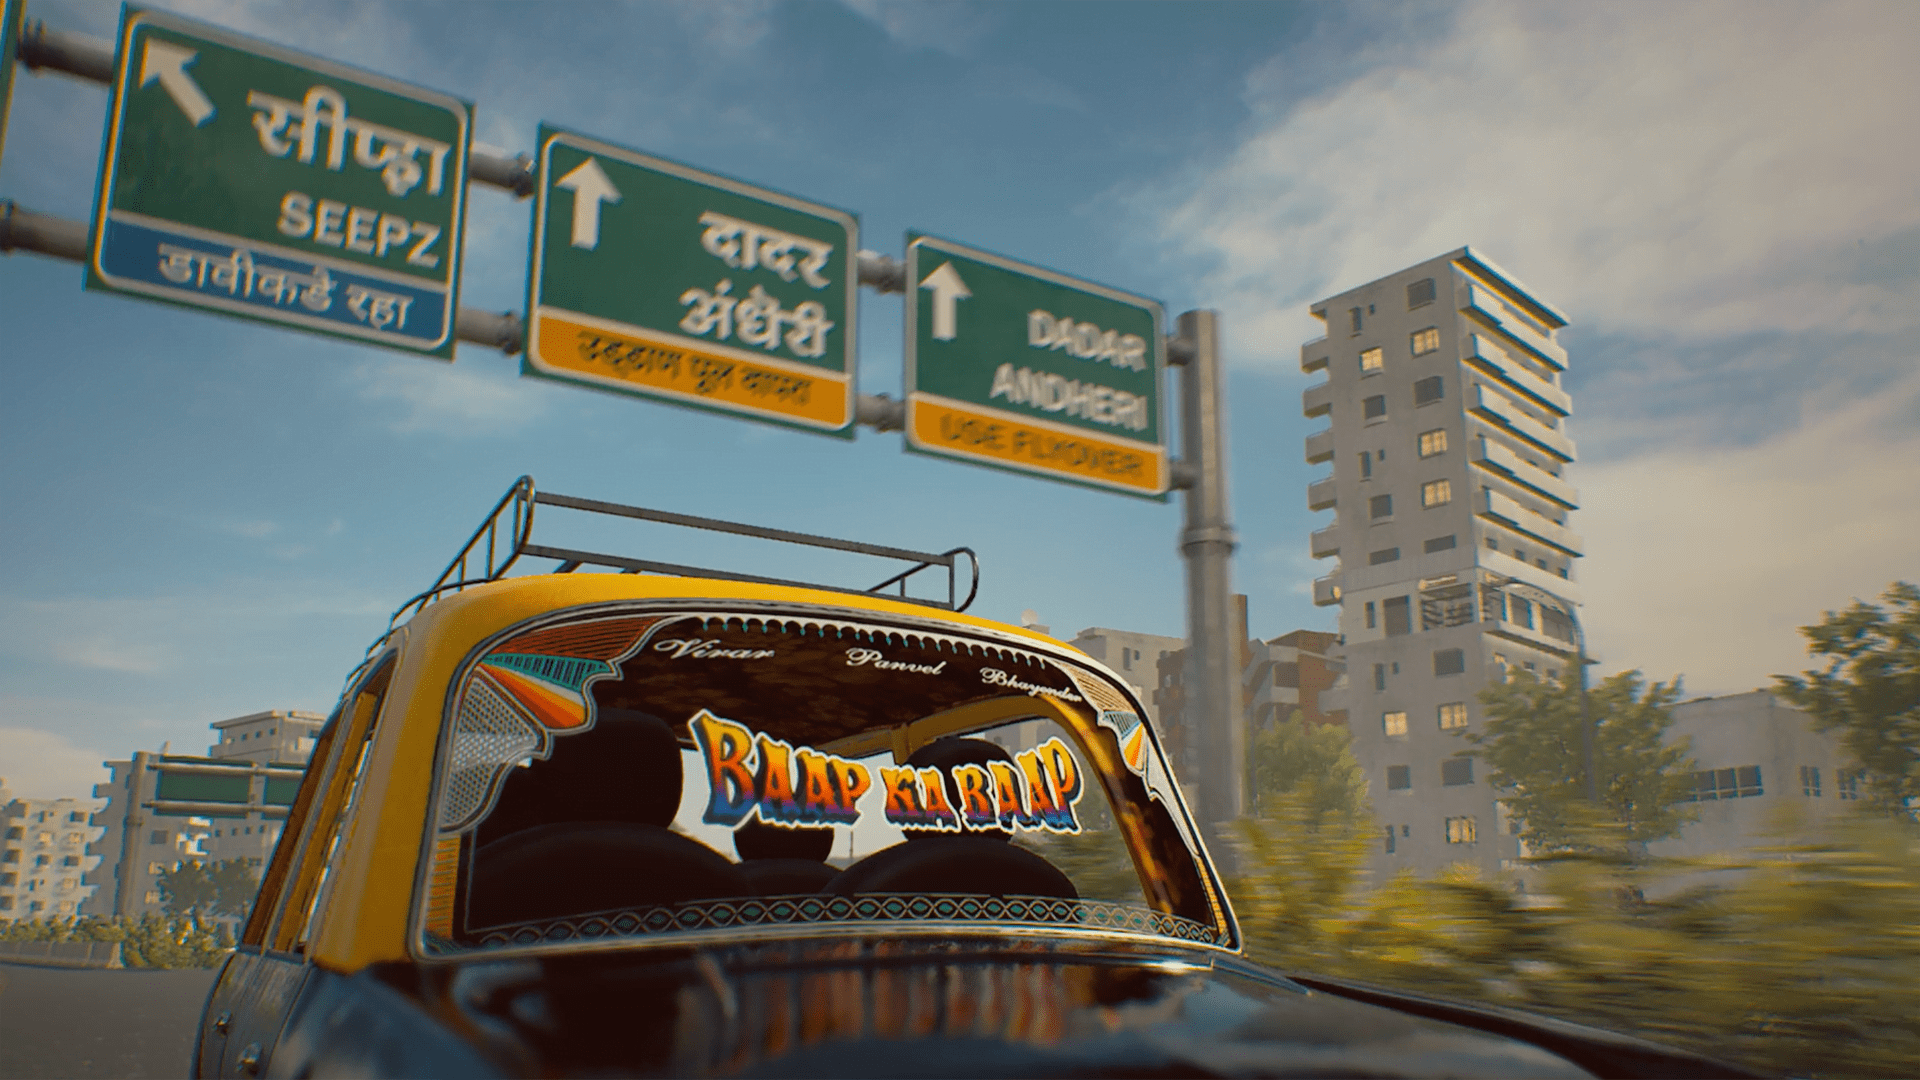 Mumbai Gullies Game 2021 Wallpapers